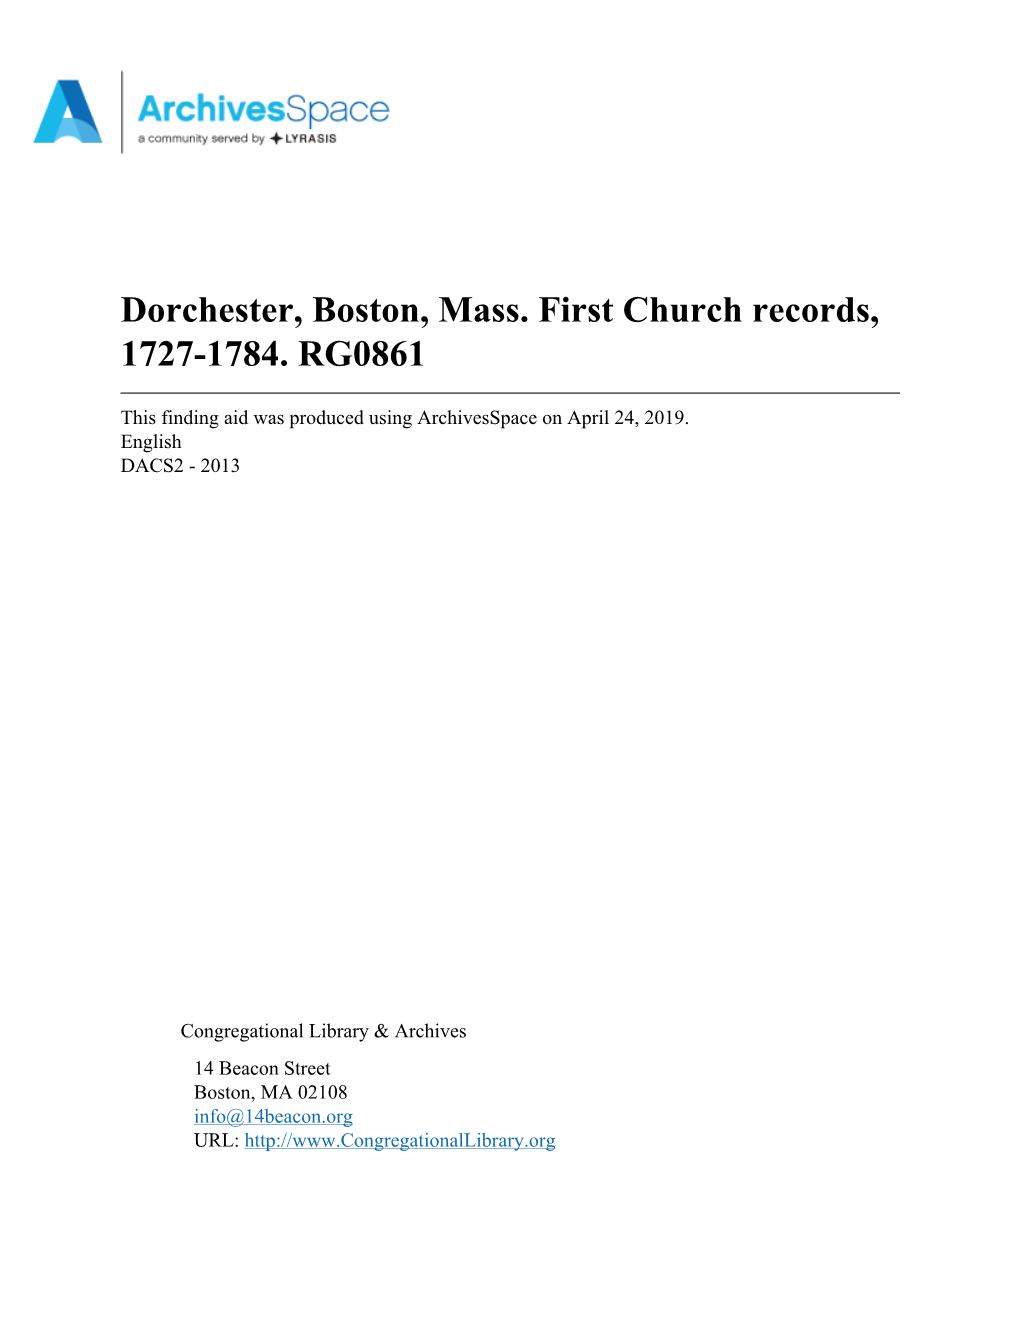 Dorchester, Boston, Mass. First Church Records, 1727-1784. RG0861